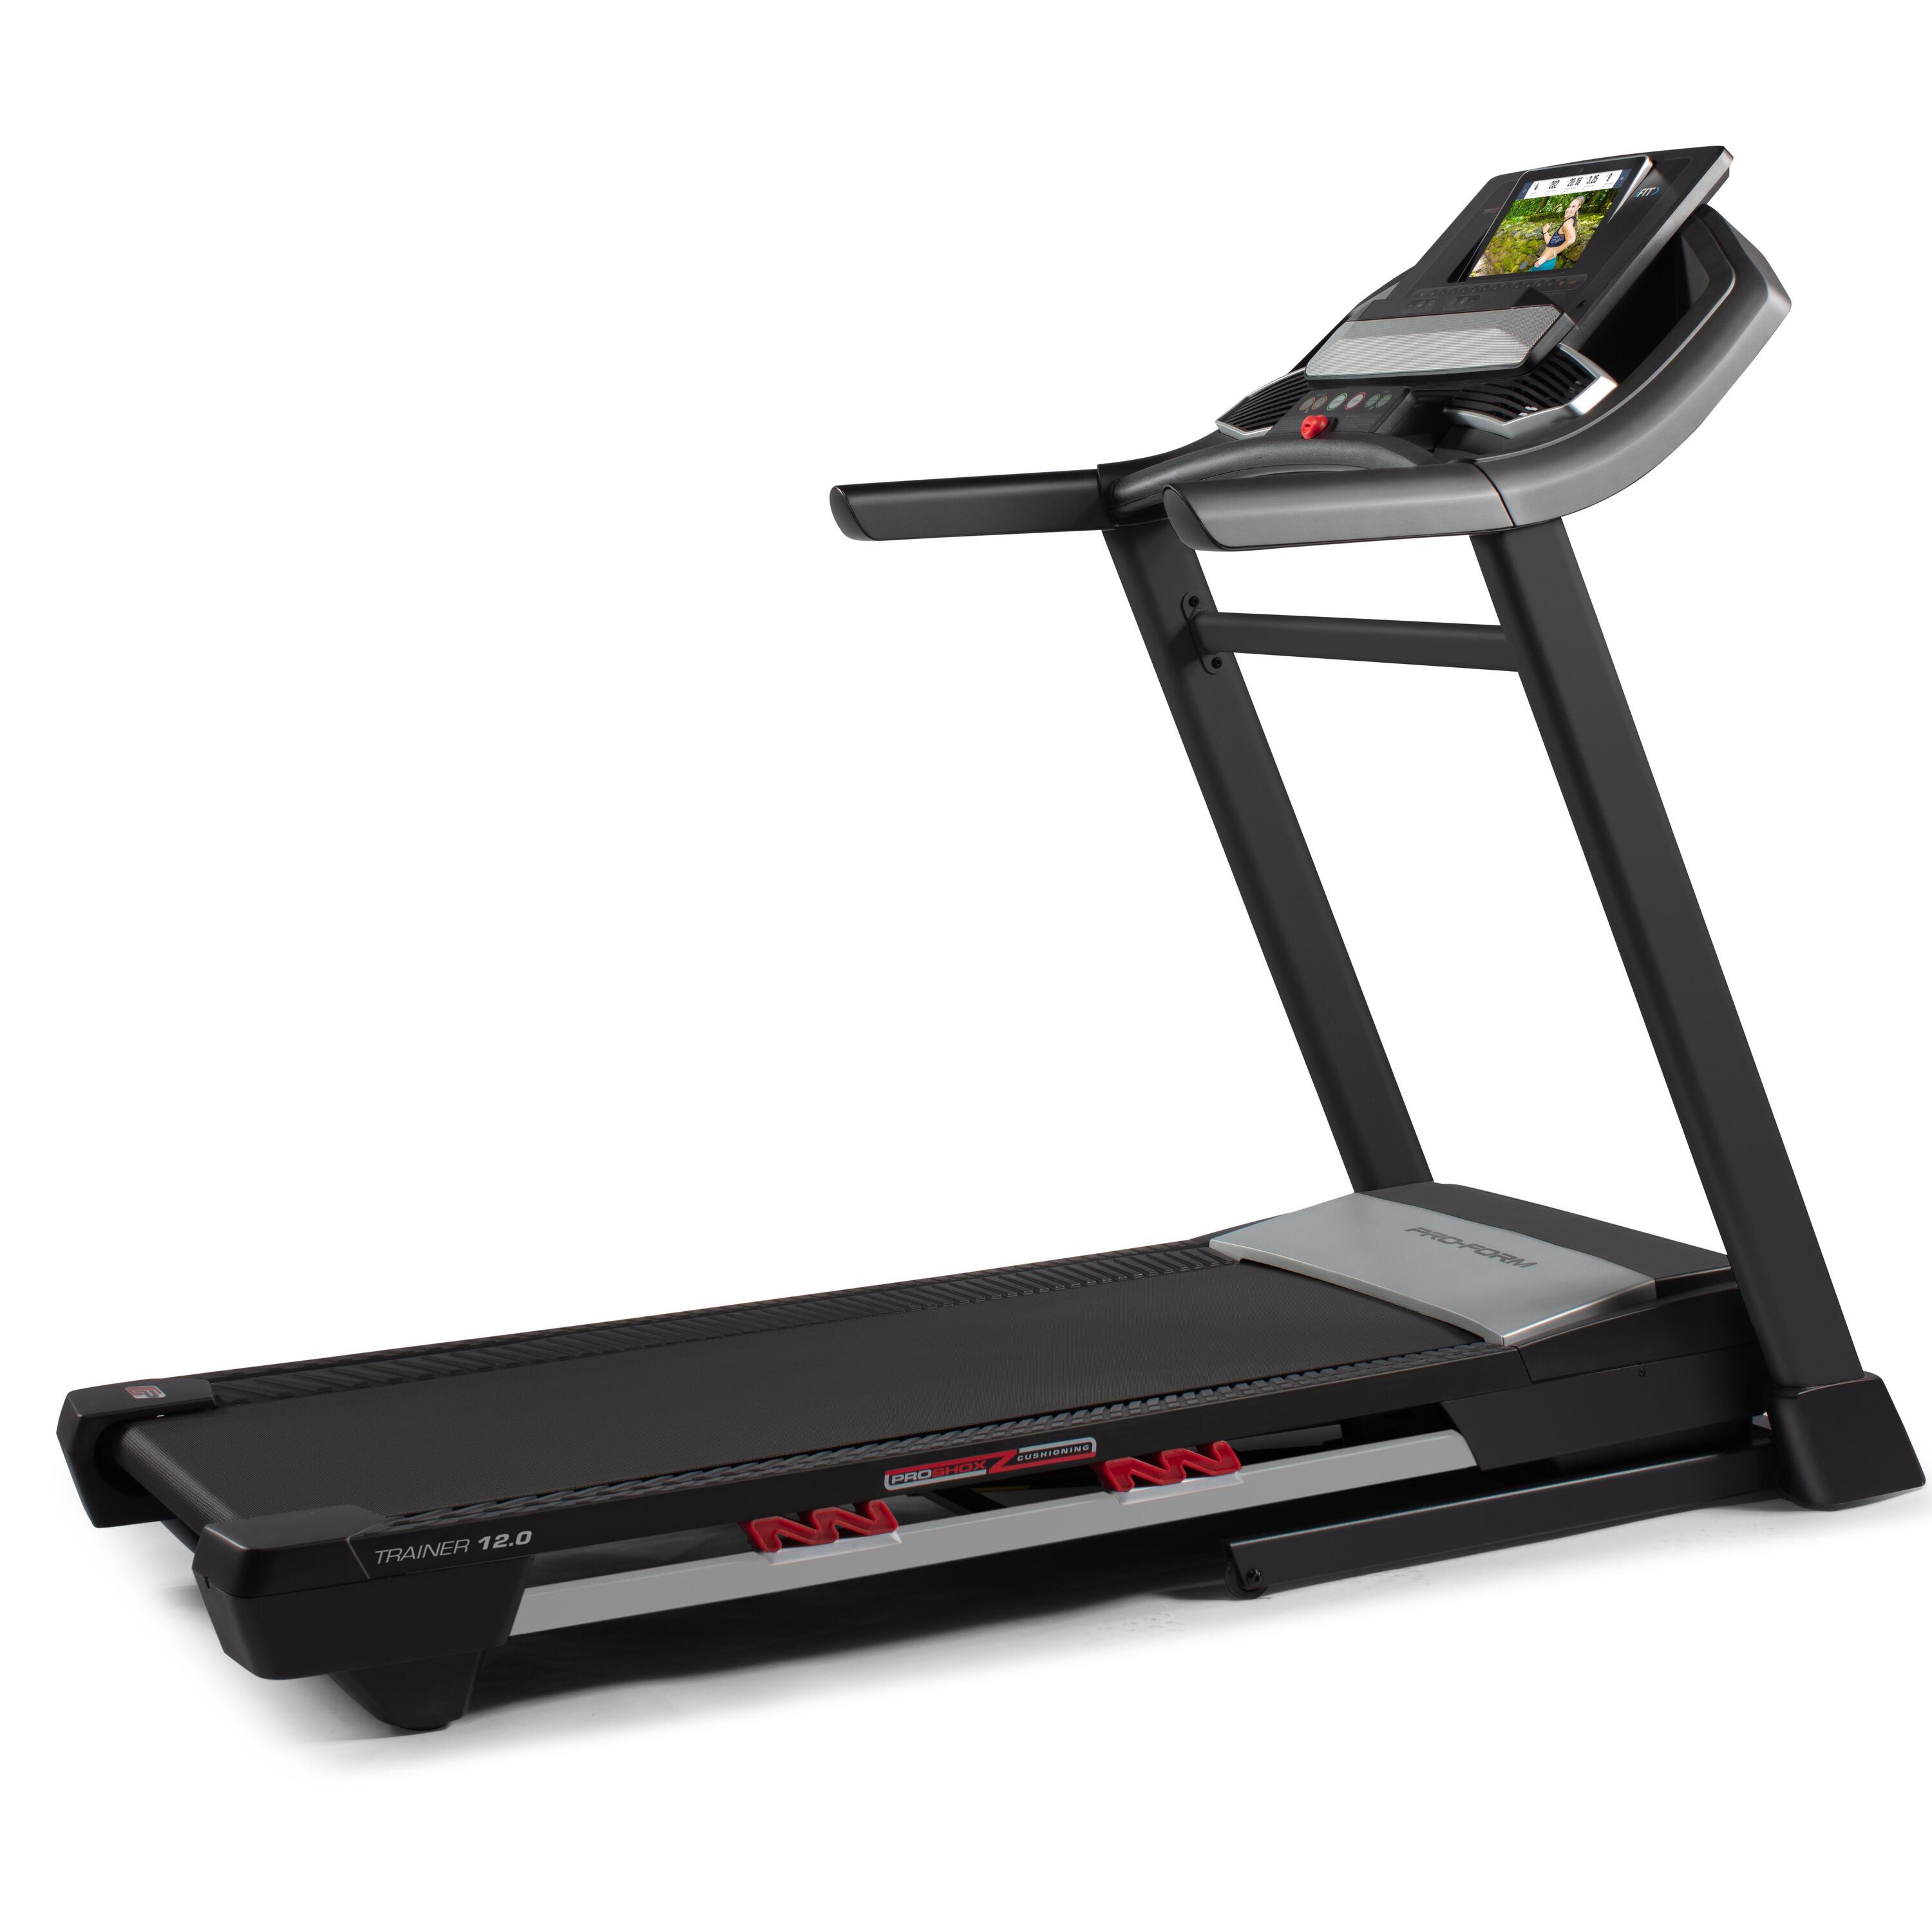 PROFORM Treadmill Trainer 12.0